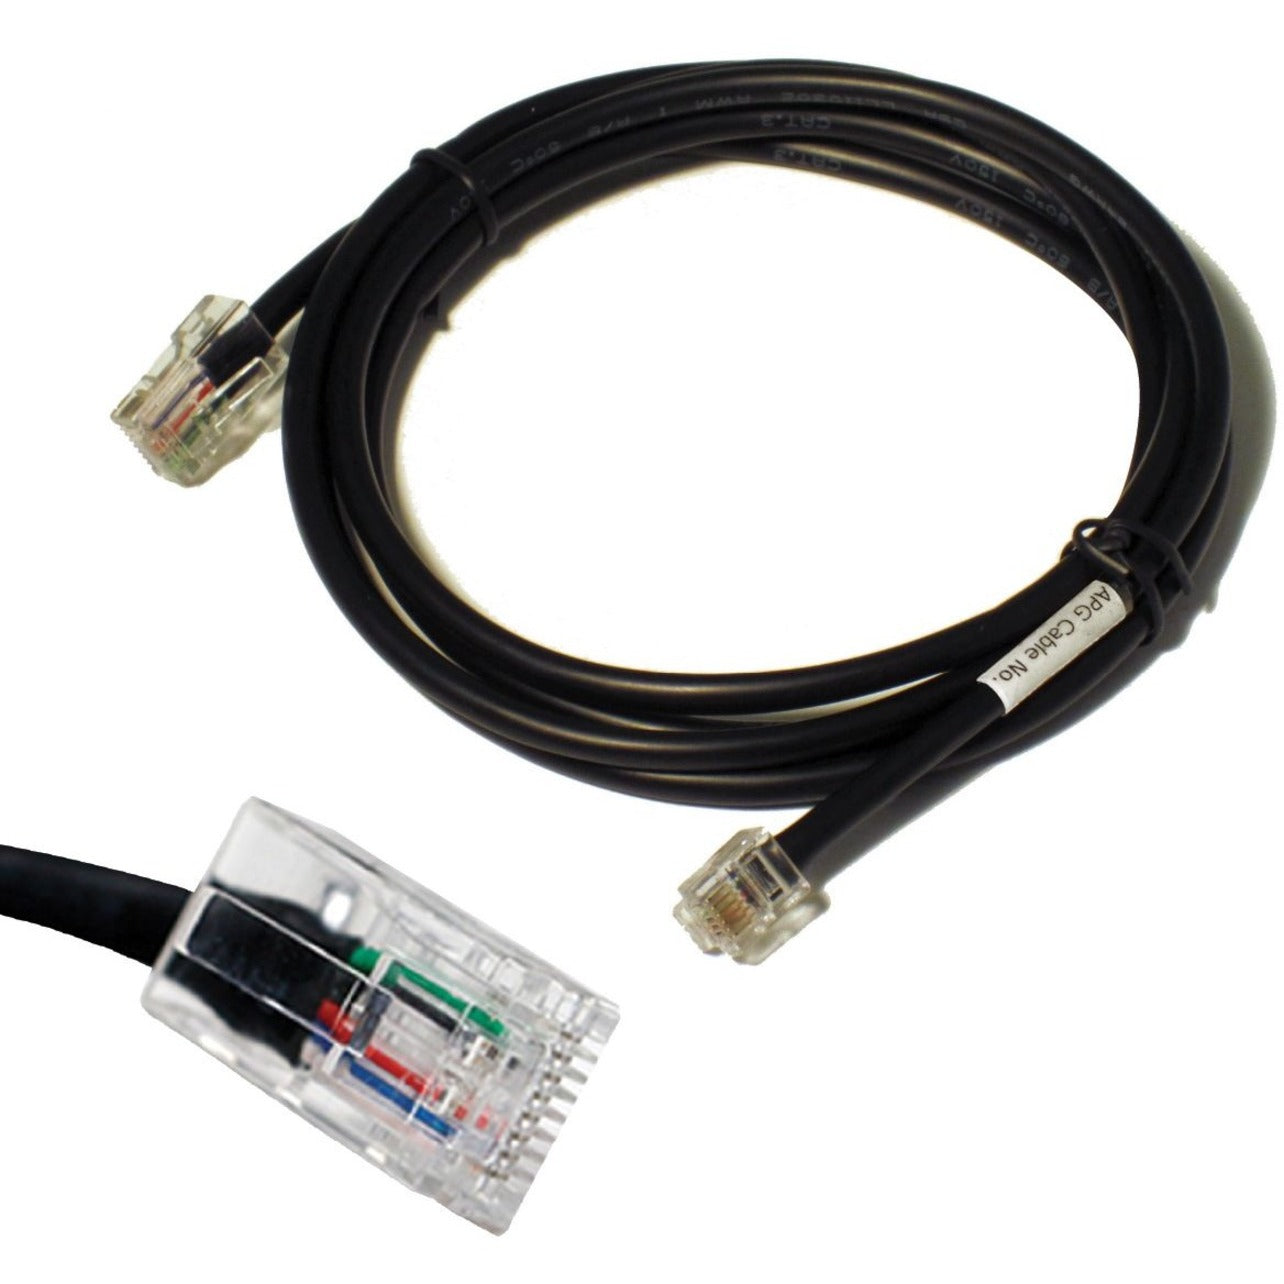 apg CD-101B RJ-12/RJ-45 Data Transfer Cable, 5 ft, POS Terminal, Printer, Cash Drawer